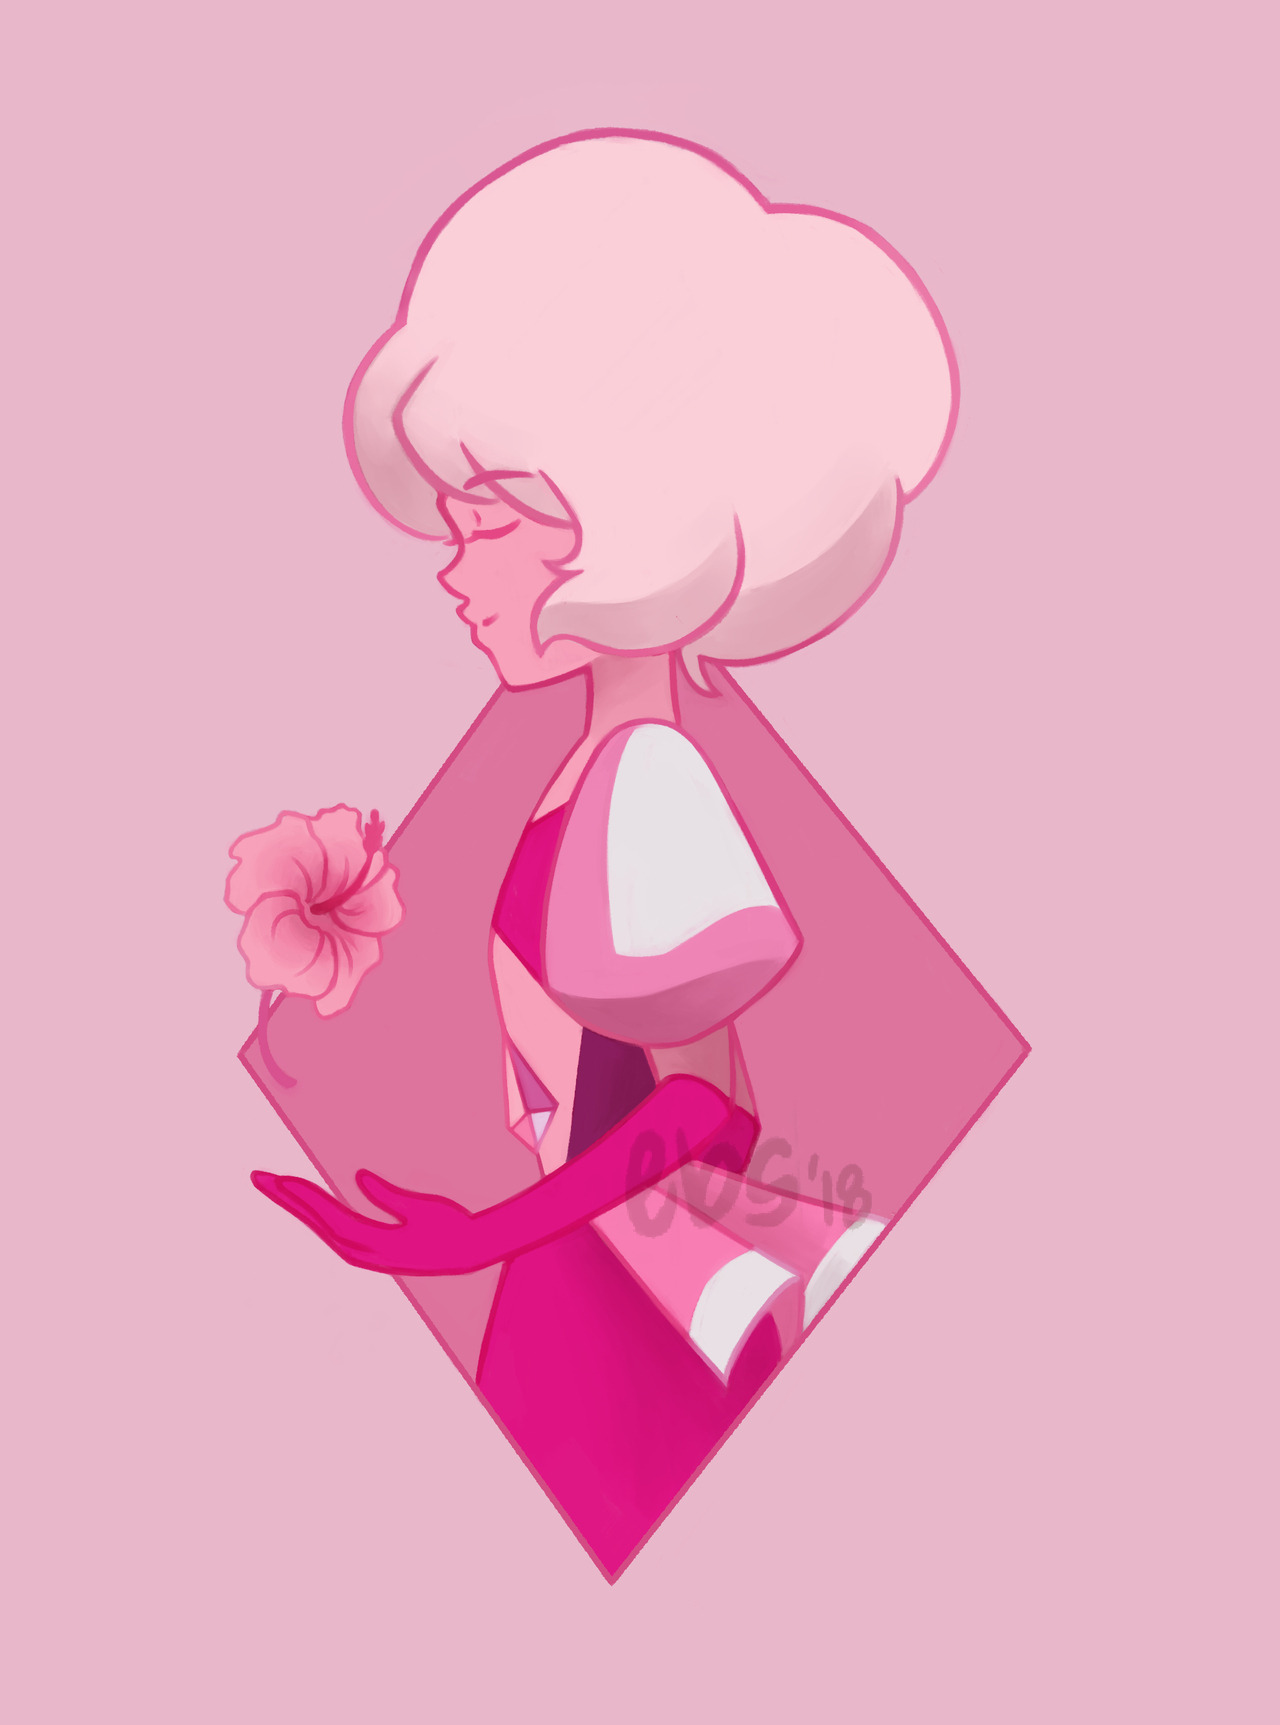 The Diamonds. I’ll do White Diamond whenever her design is revealed.